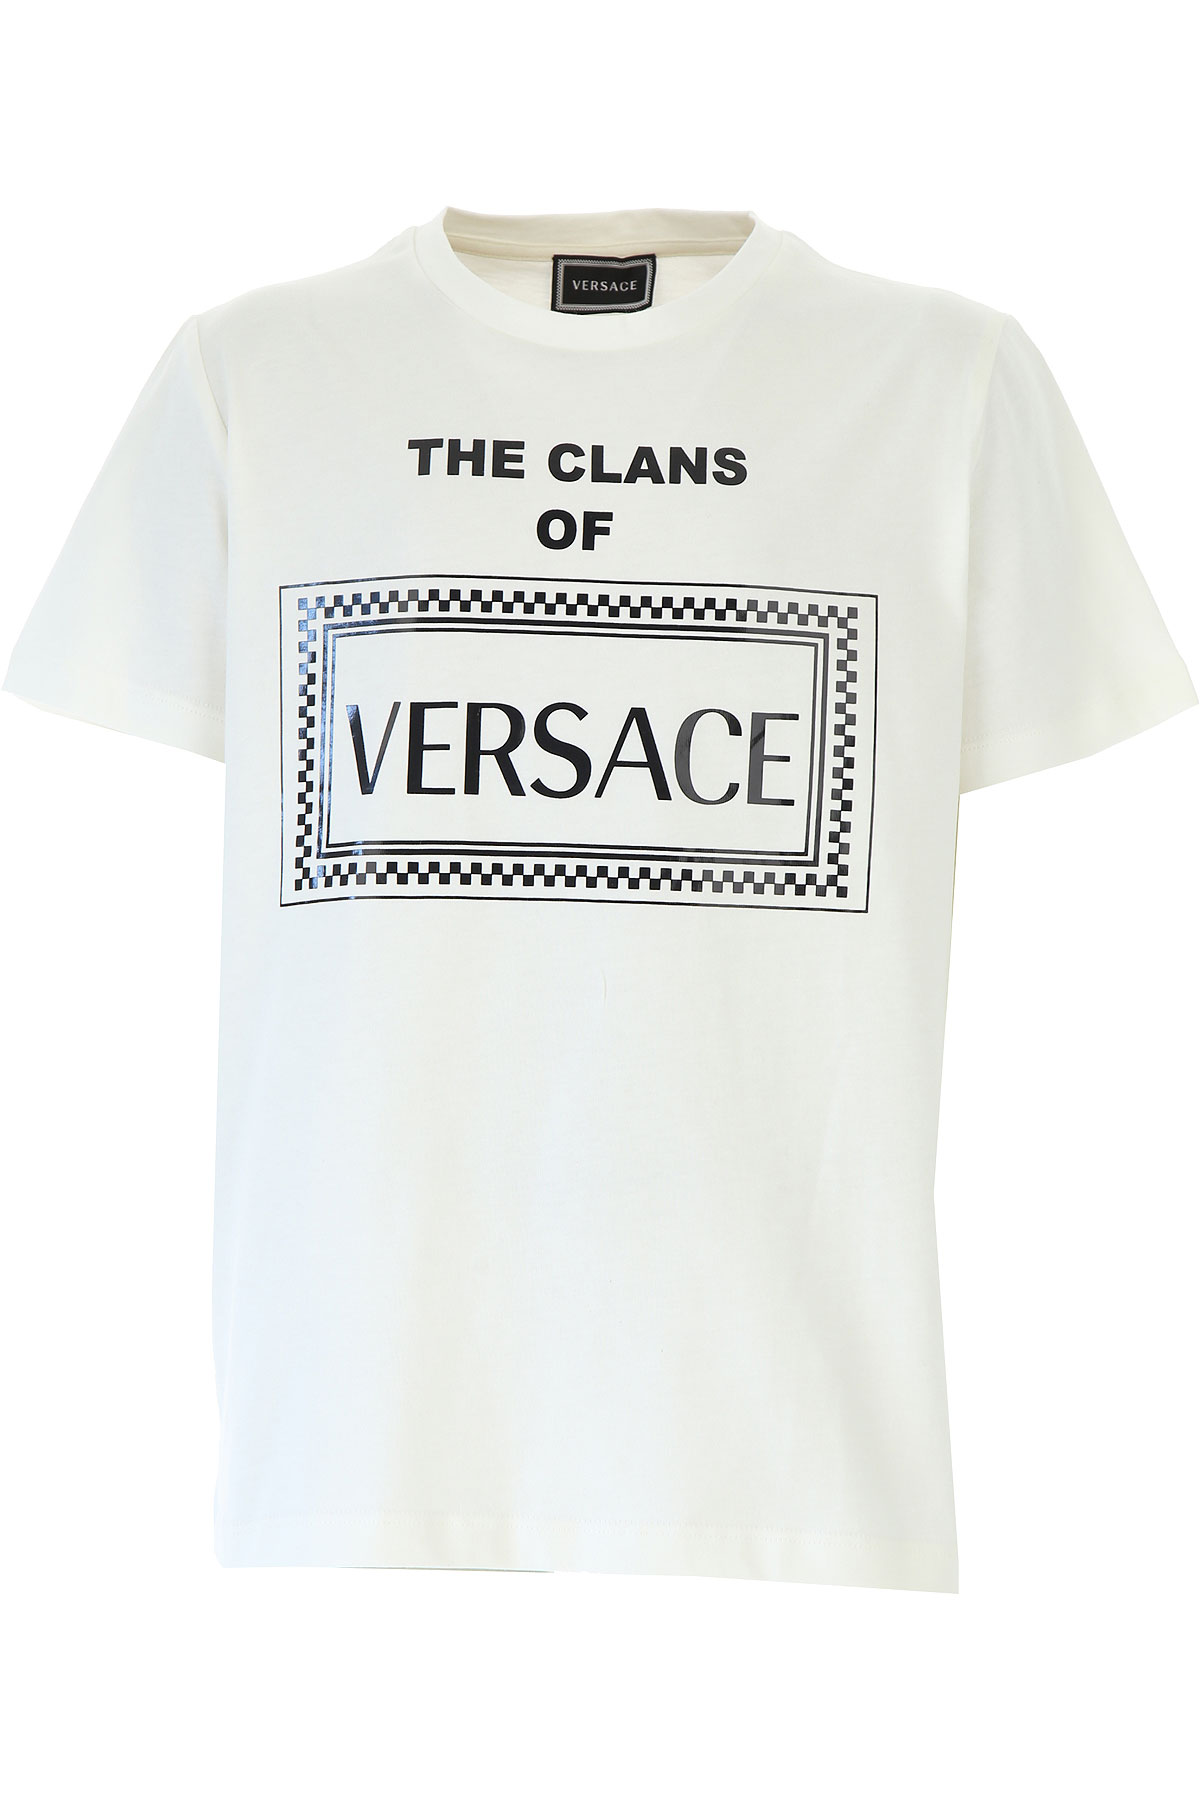 Versace Kinder T-Shirt für Jungen Günstig im Sale, Weiss, Baumwolle, 2017, 10Y 12Y 14Y 4Y 6Y 8Y